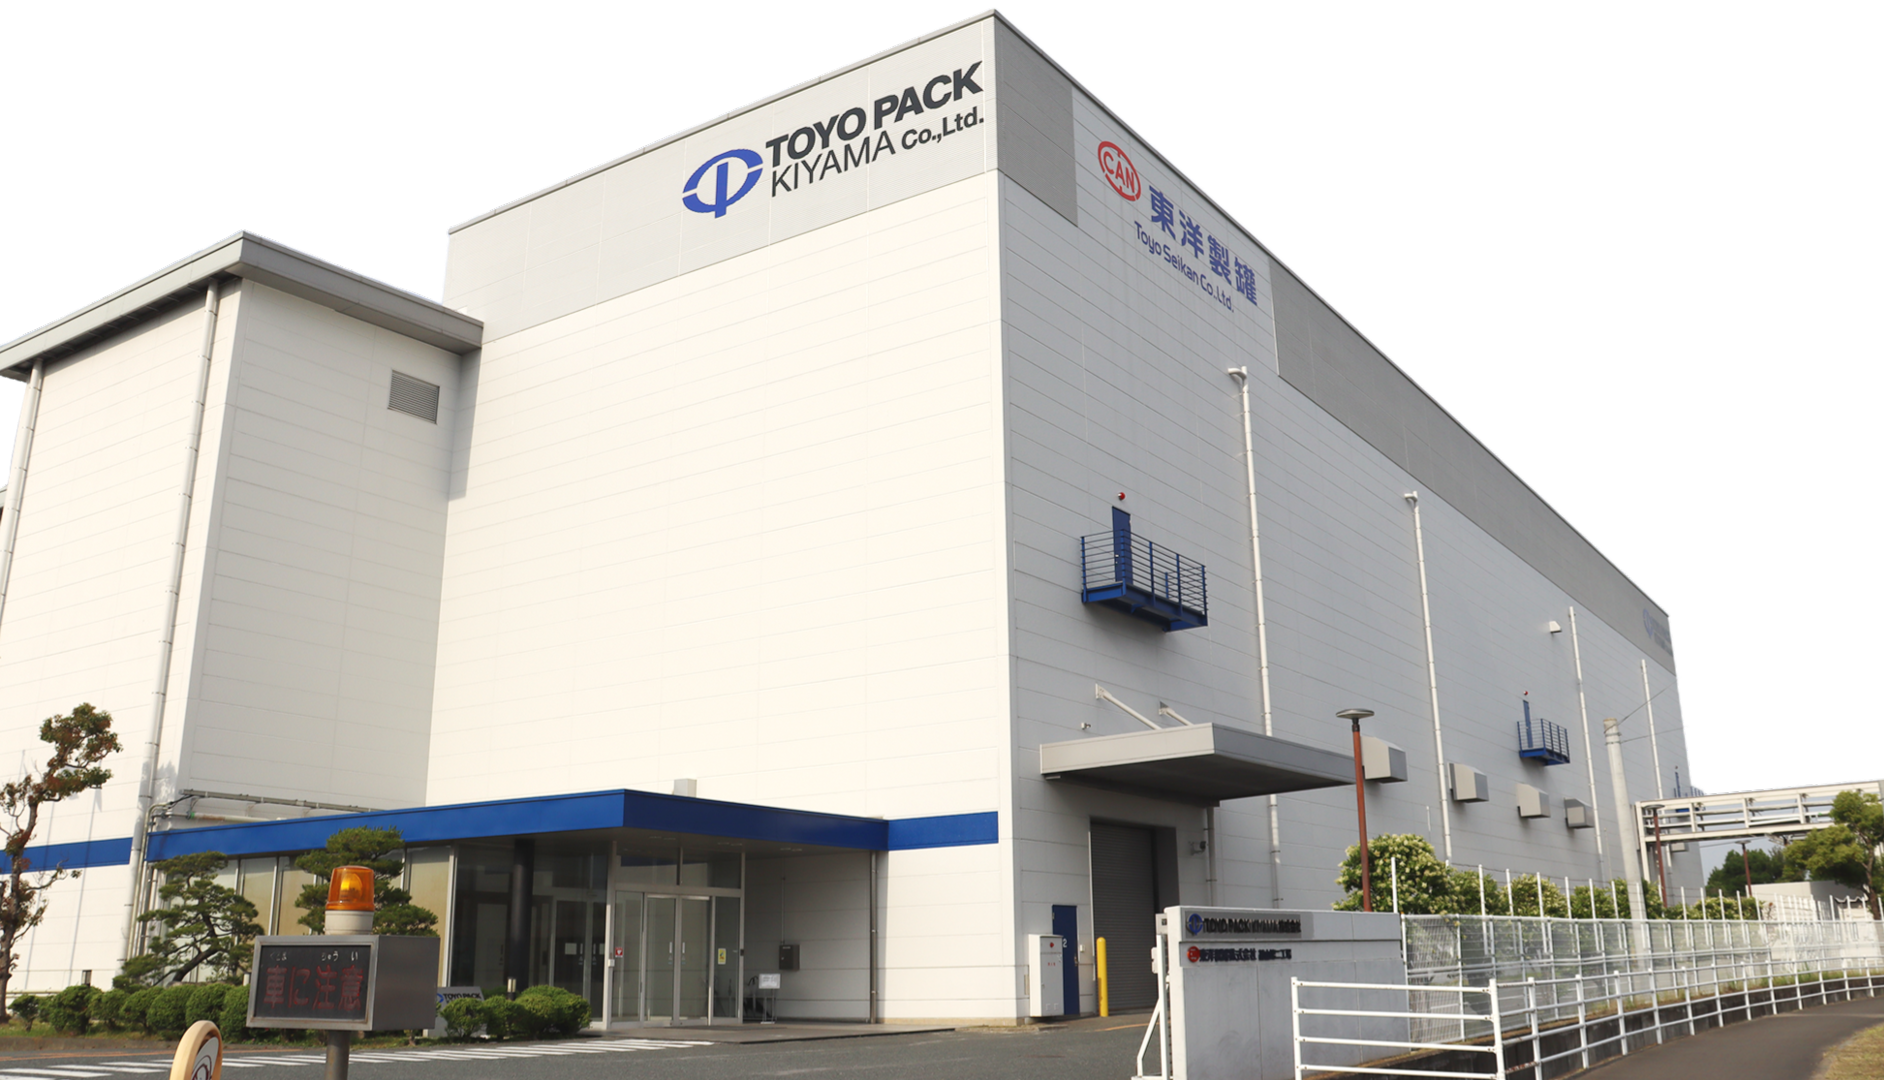 TOYO PACK KIYAMA 環境にやさしい製造システムを導入し、最高品質の